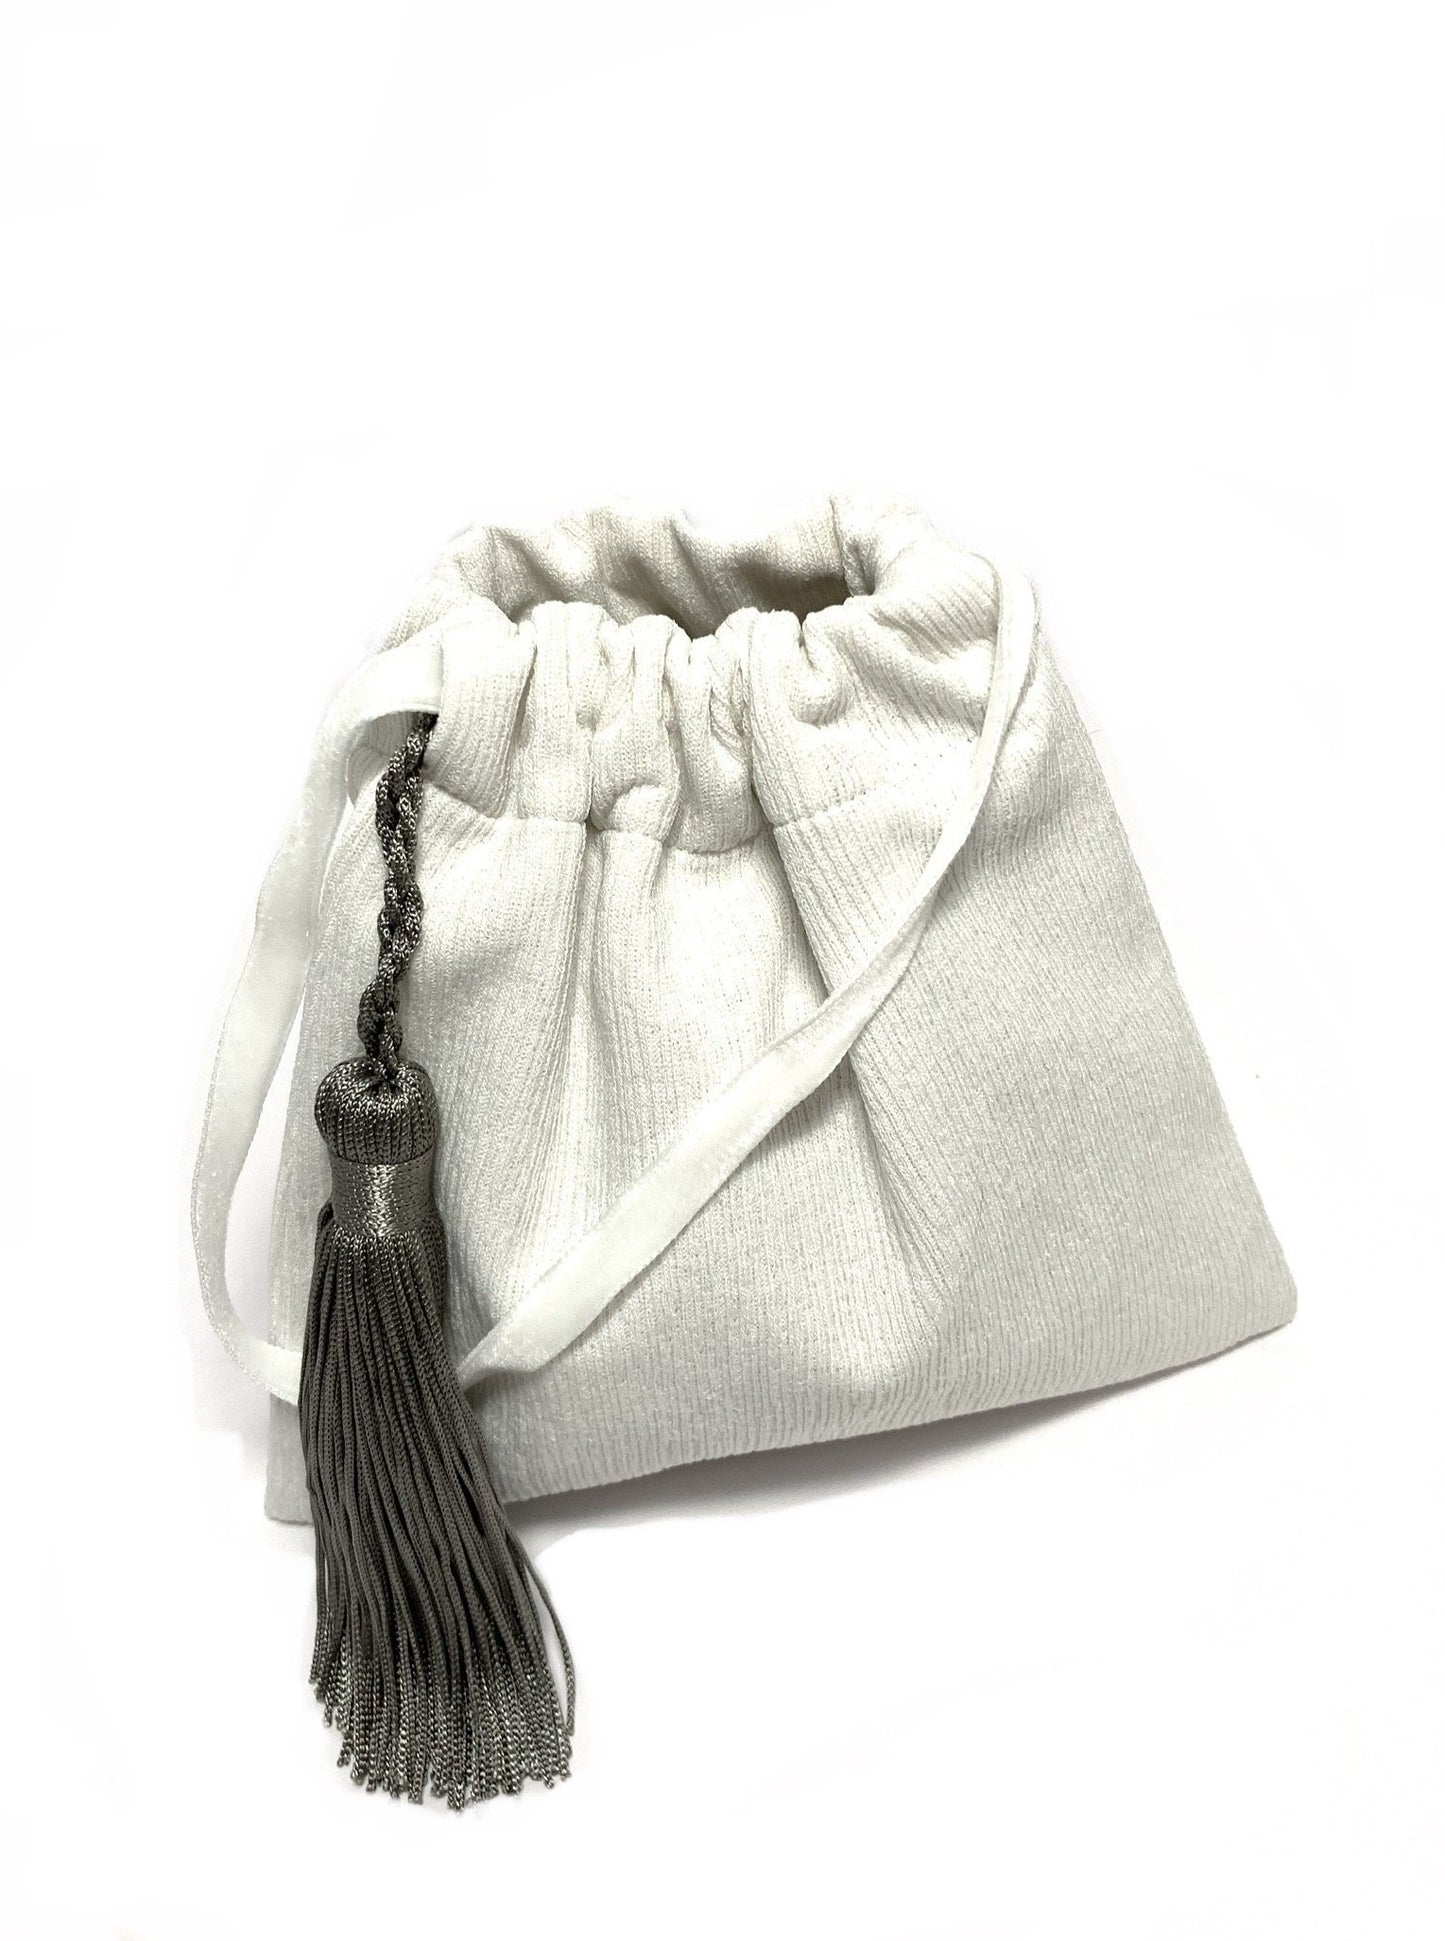 White wedding purse